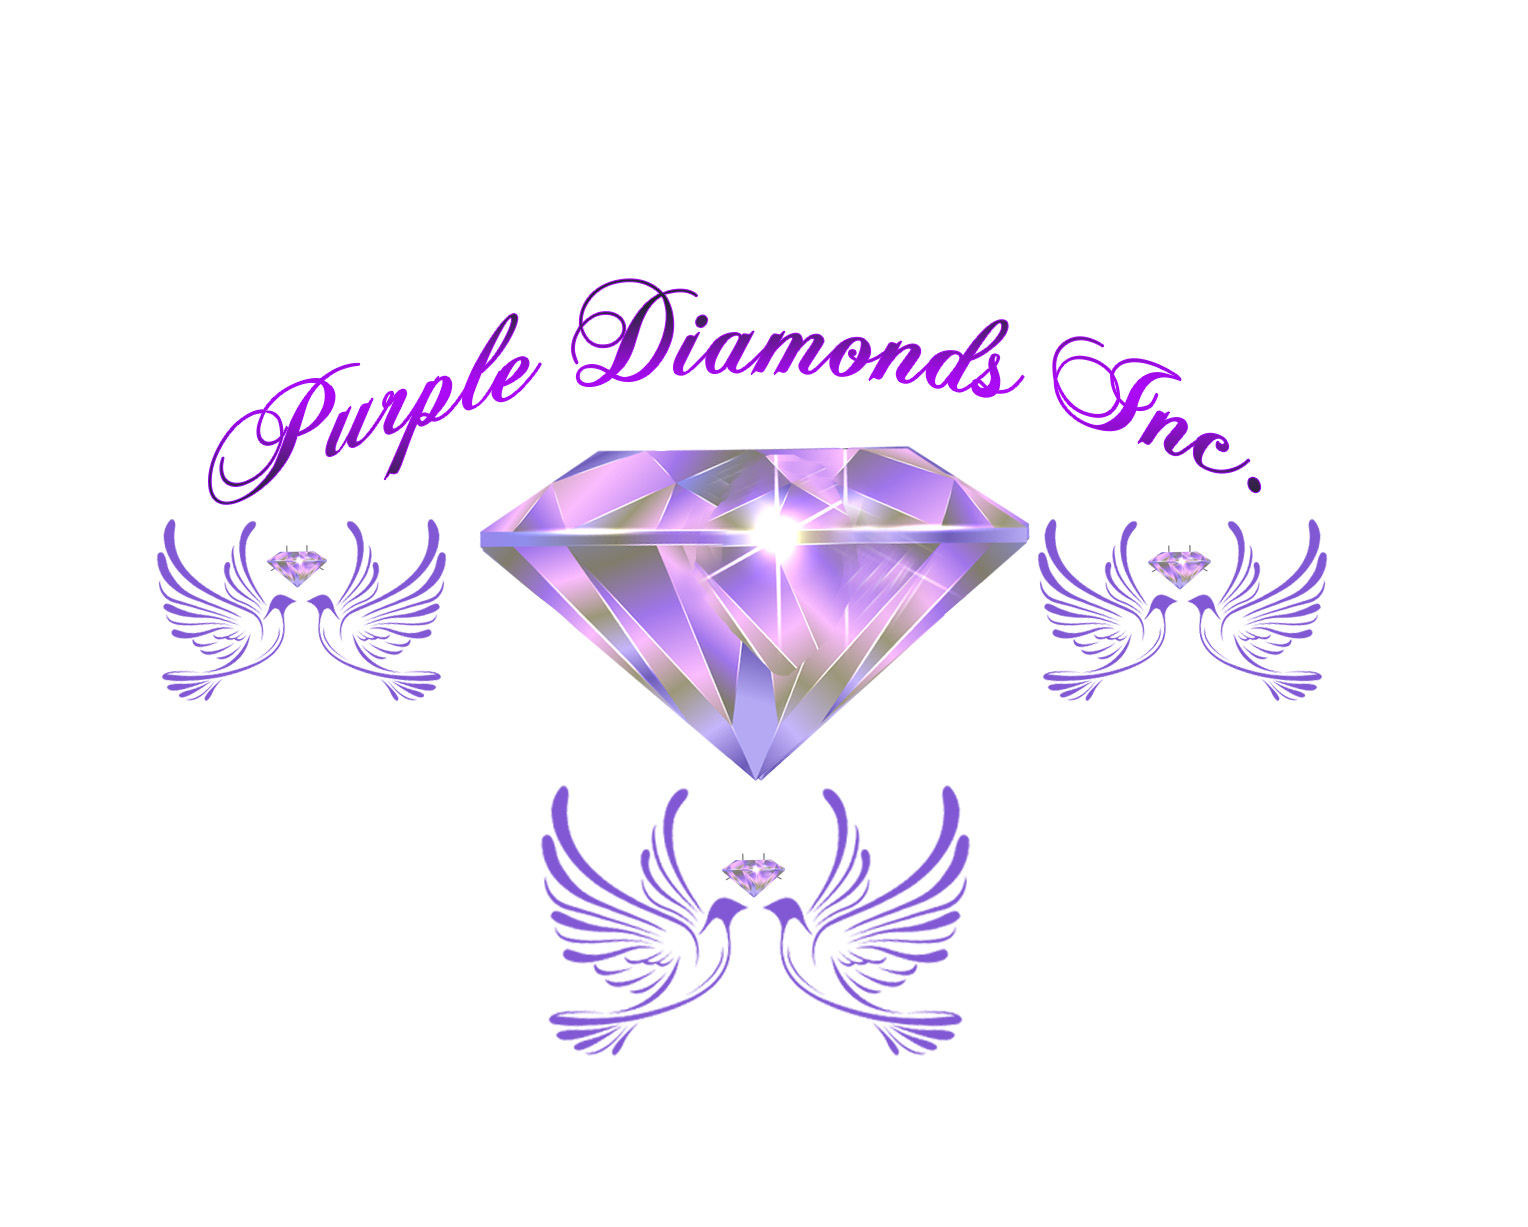 purple diamonds inc on white